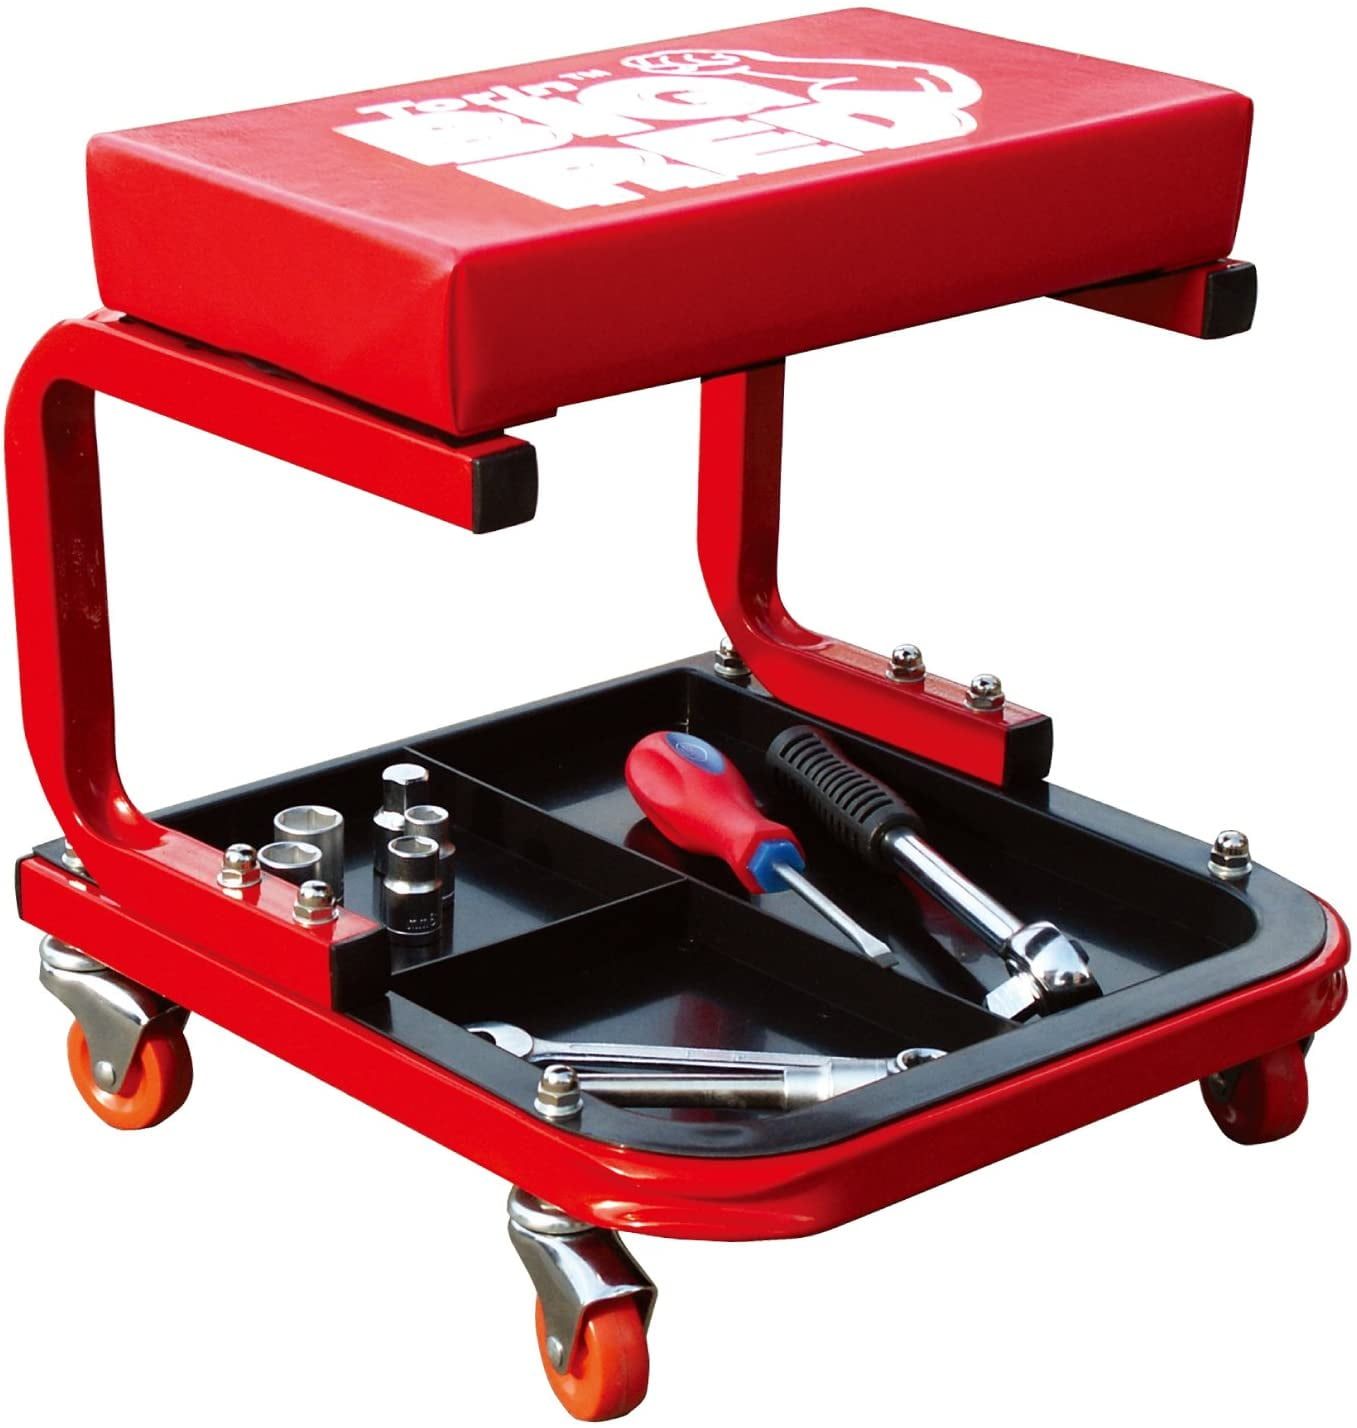 Torin Big Red DTR6300 Rolling Garage/Shop Creeper Seat